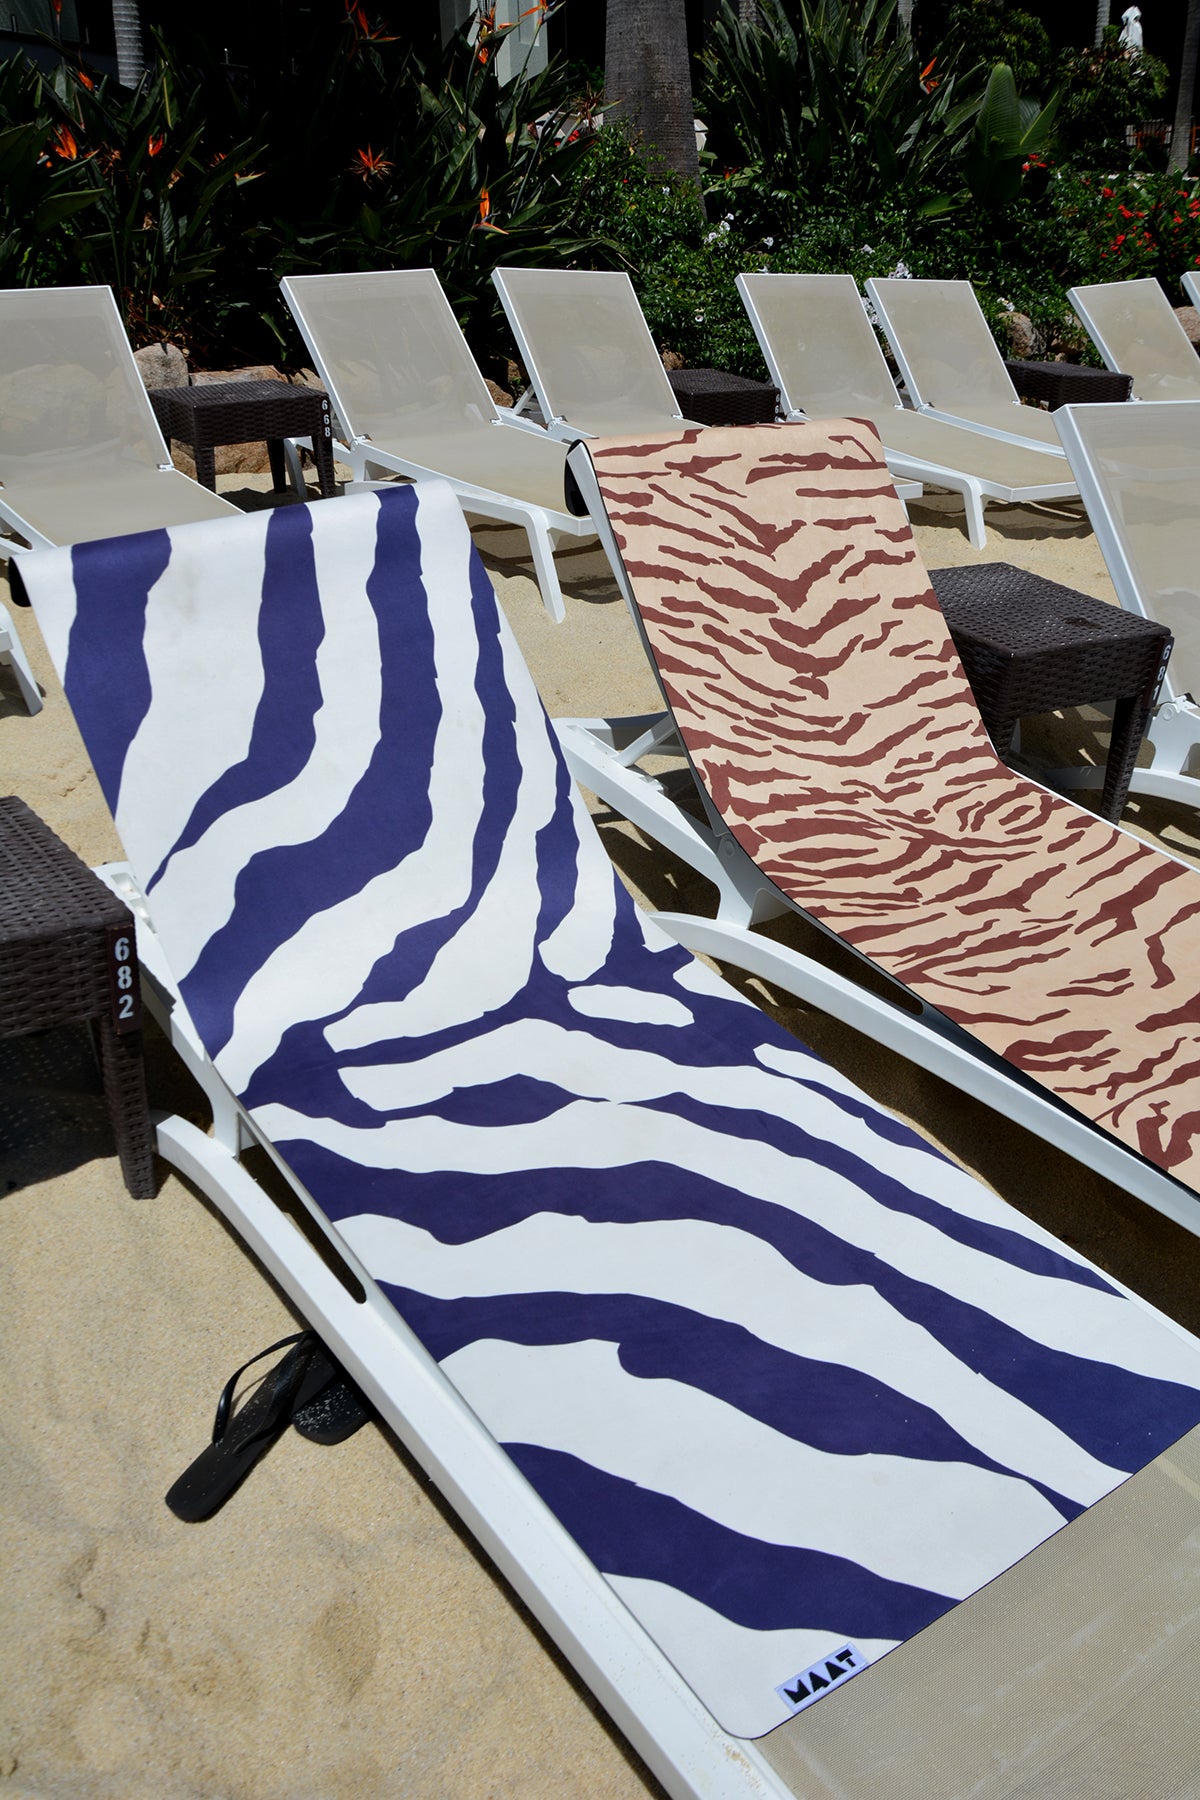 Yoga mat lying on top of a beach chair